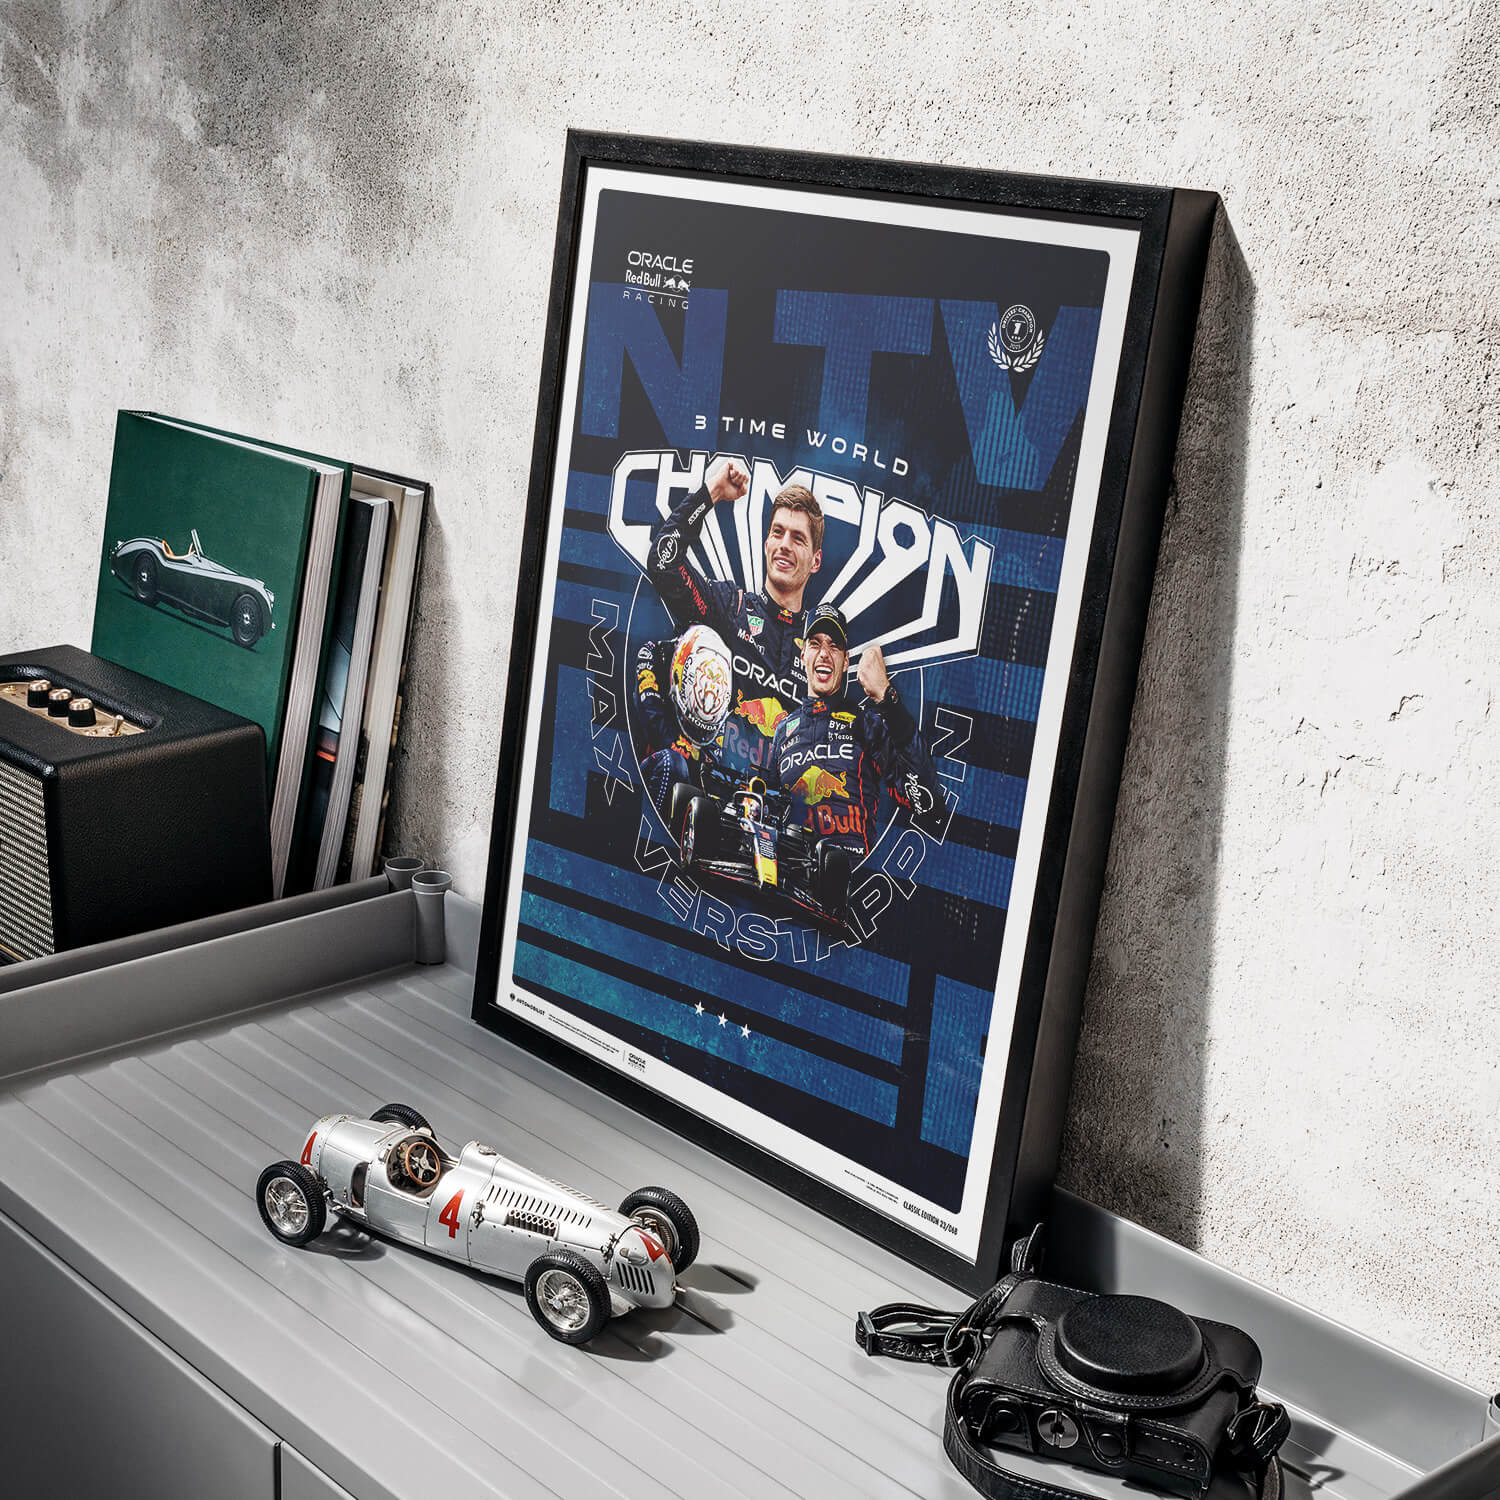 Oracle Red Bull Racing - Max Verstappen - Champion du Monde des Pilotes F1® 2023